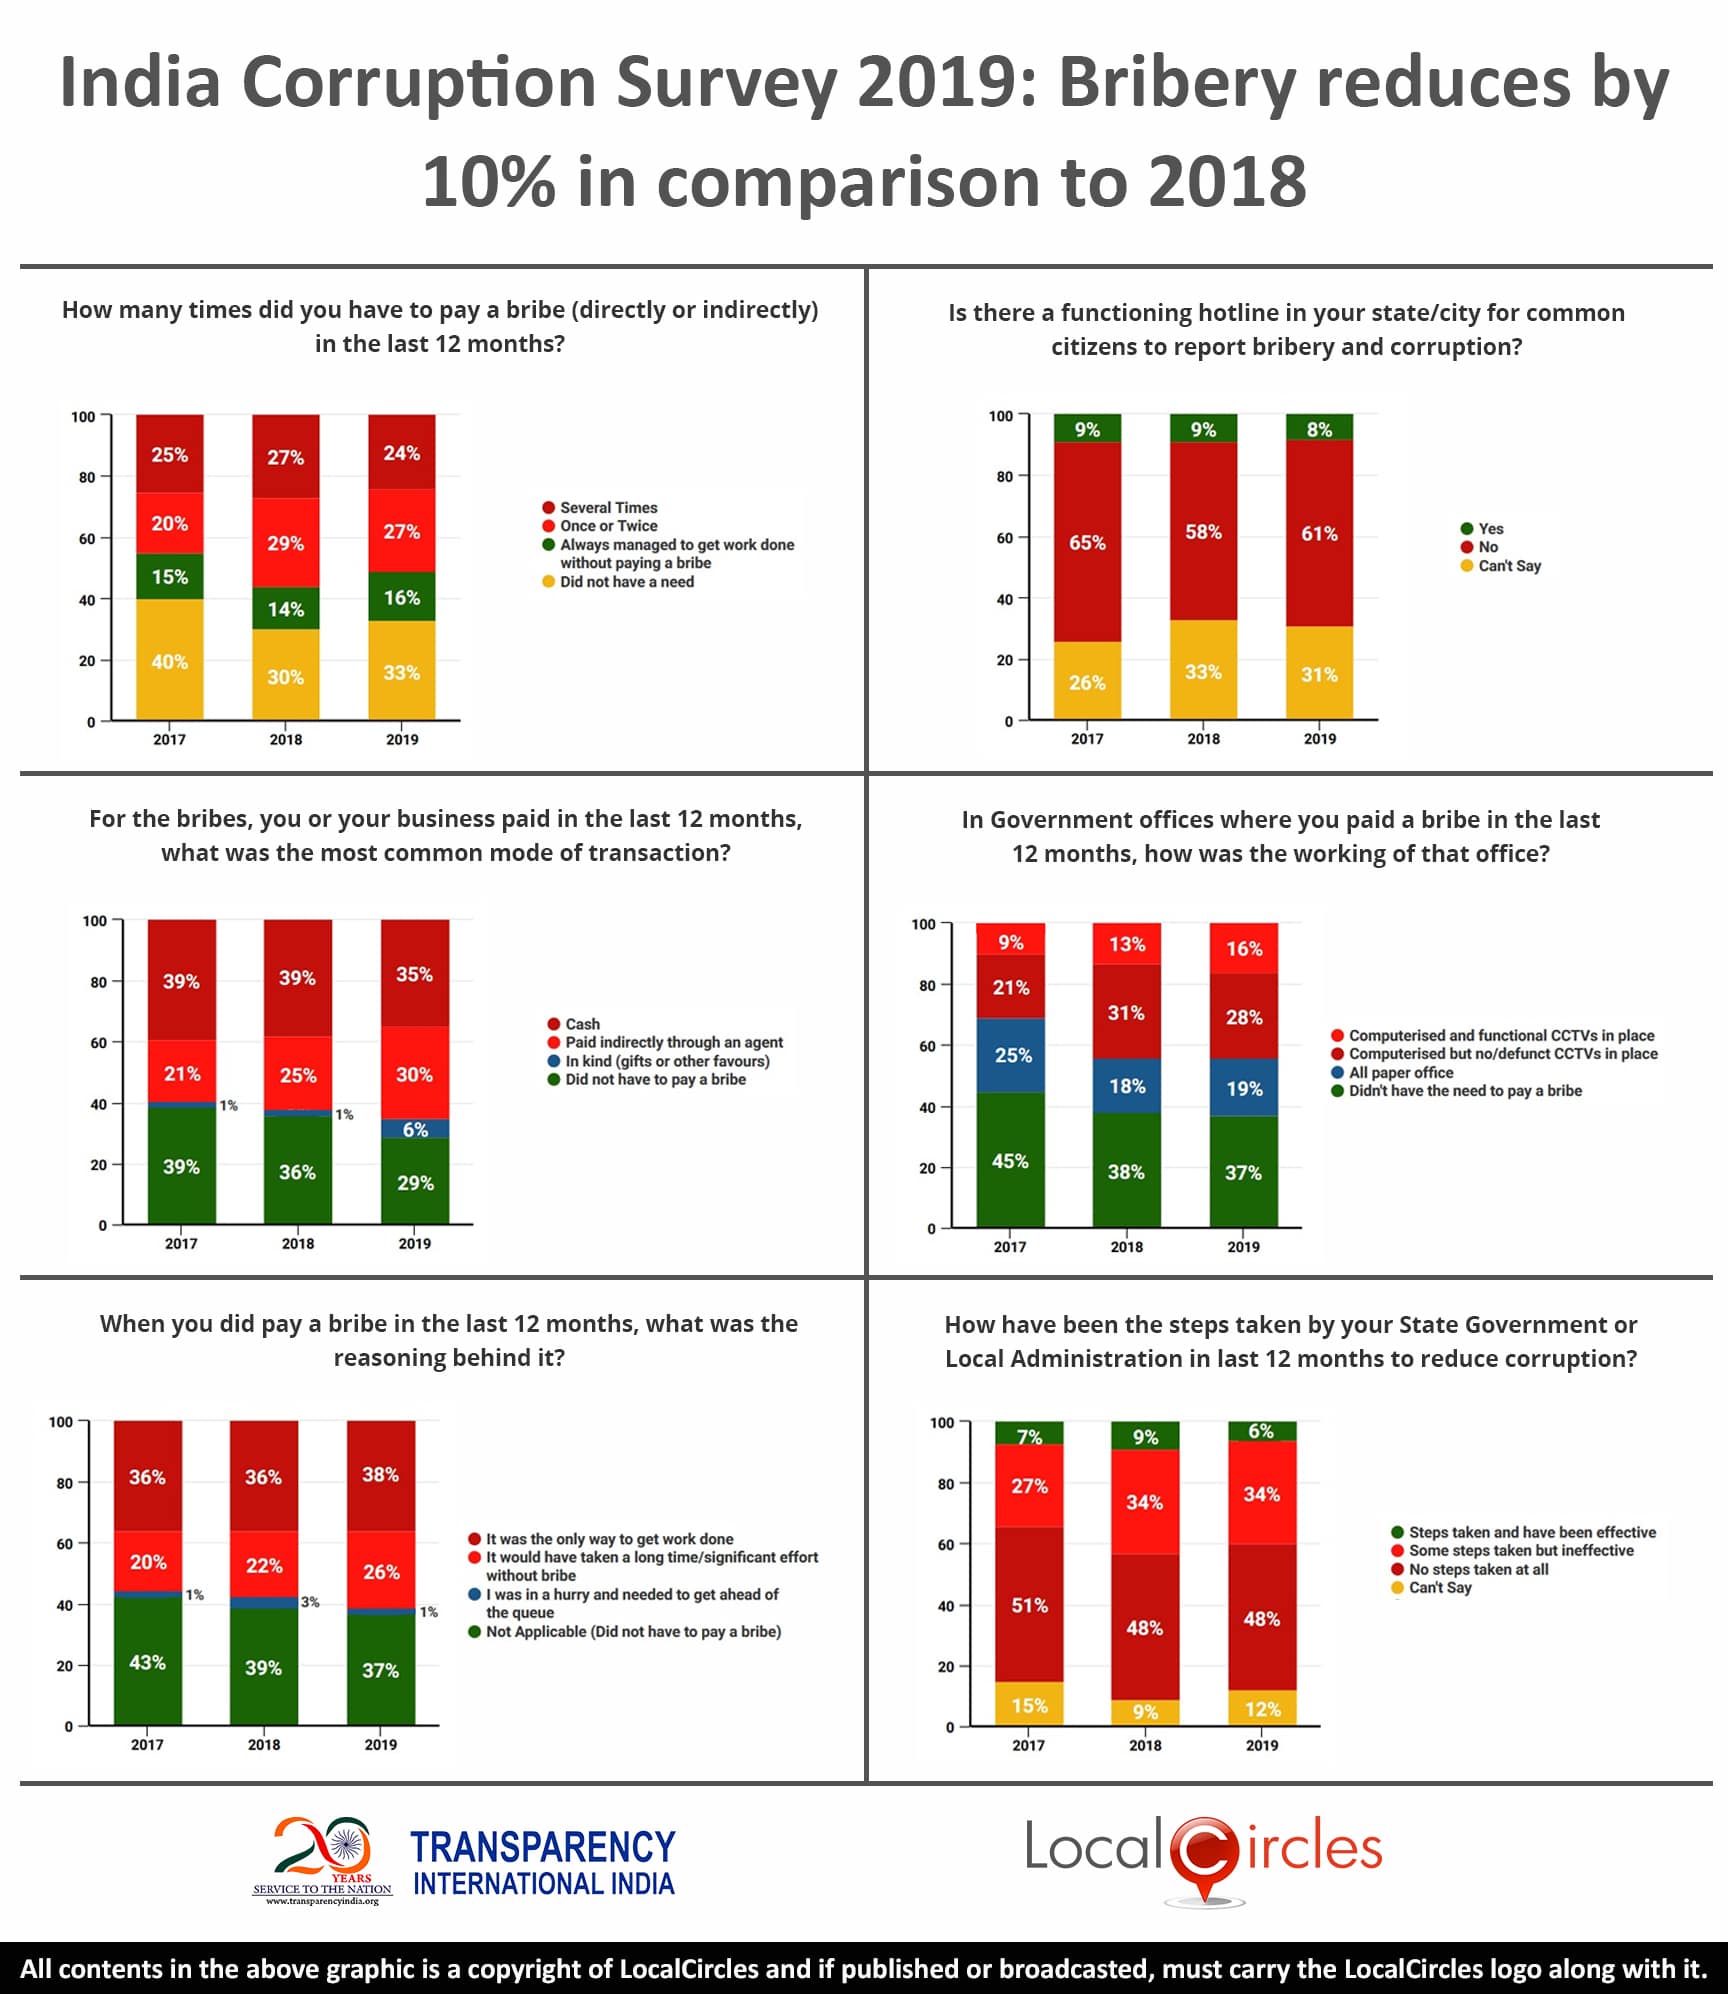 India Corruption Survey 2017, 2018 & 2019 Comparison: Bribery reduces by 10% in comparison to 2018